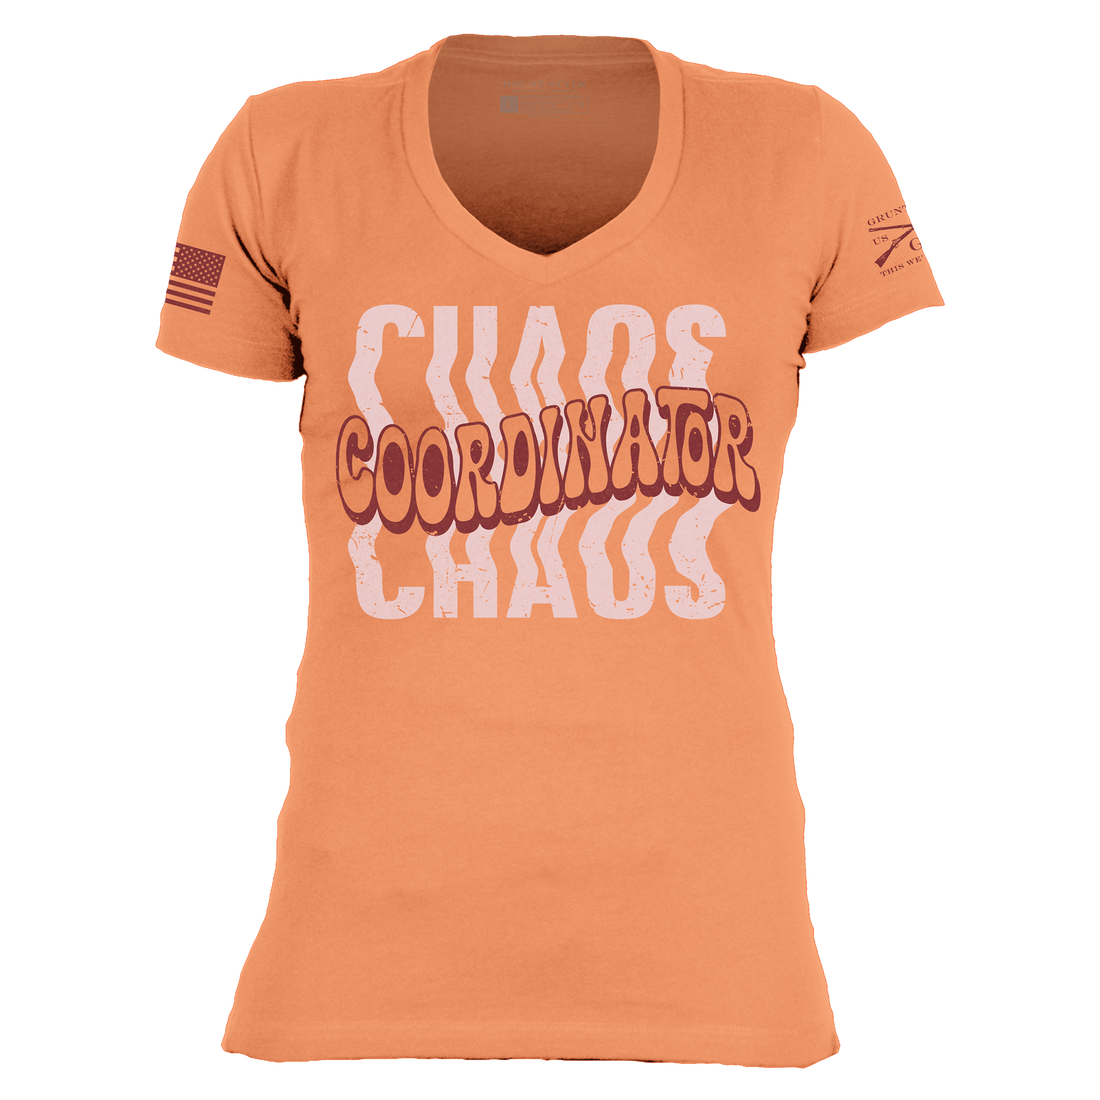 Women's Chaos Coordinator V-Neck - Apricot Crush